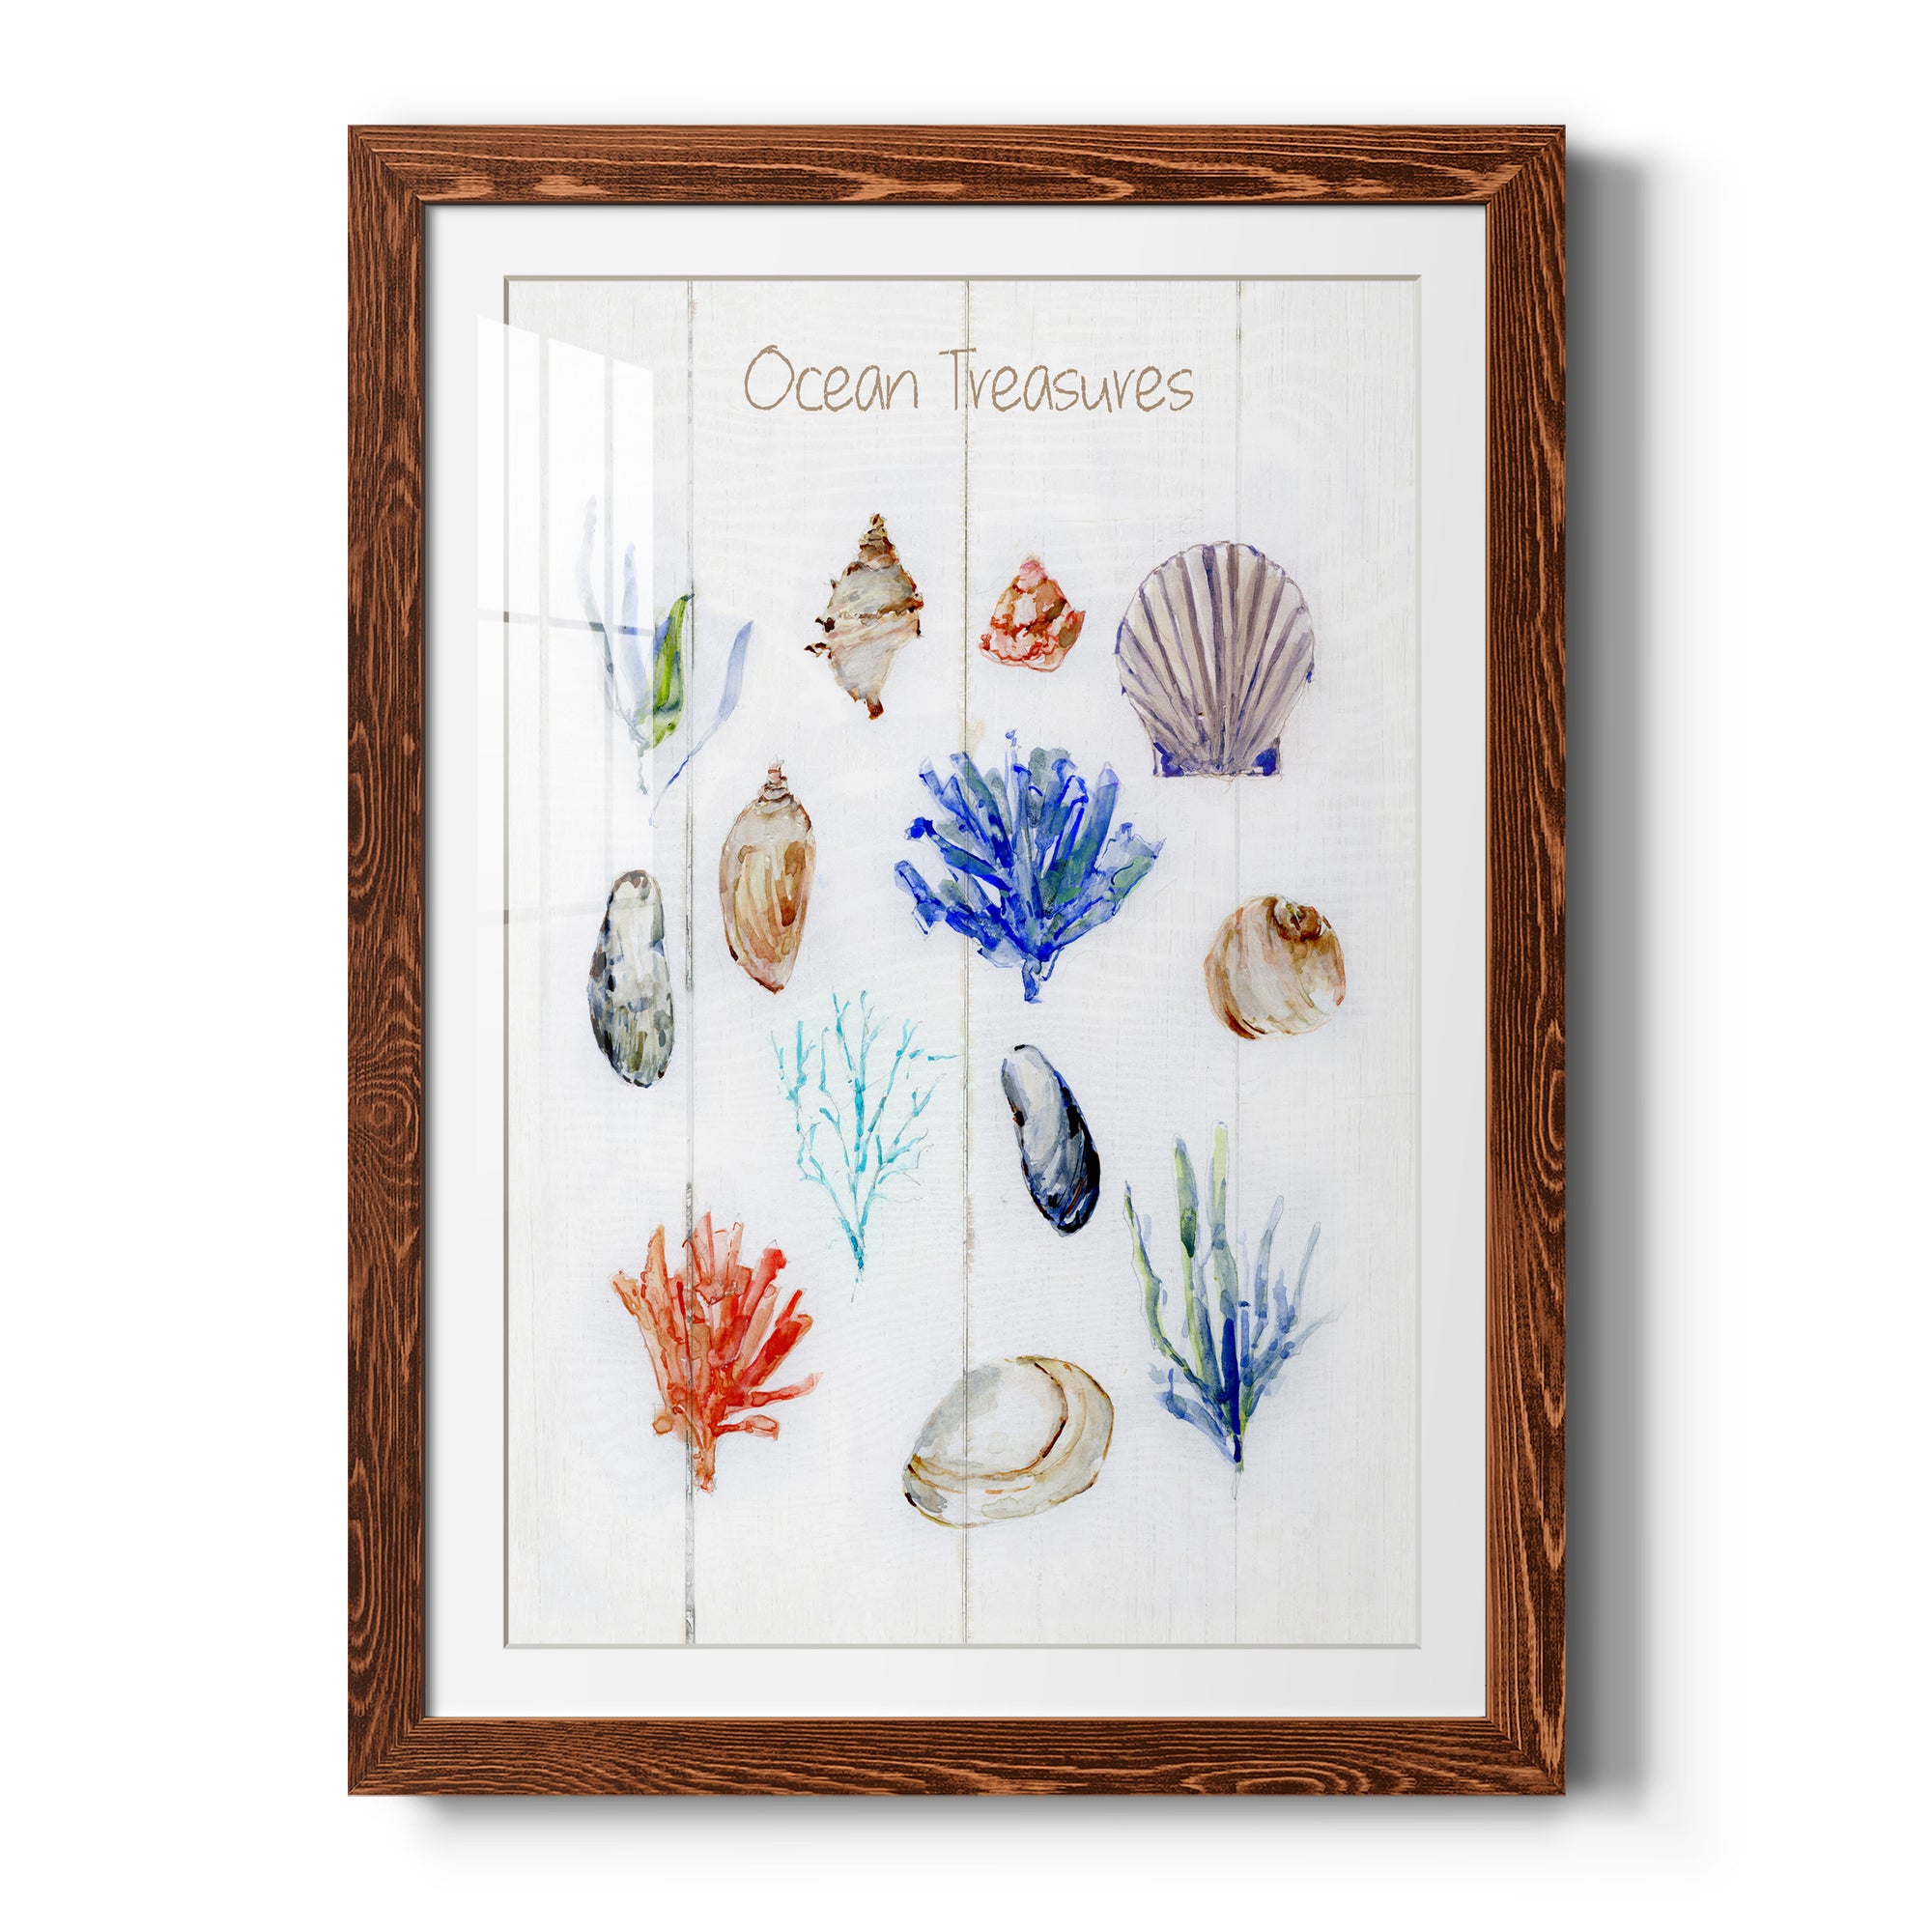 Ocean Treasures - Premium Framed Print - Distressed Barnwood Frame - Ready to Hang